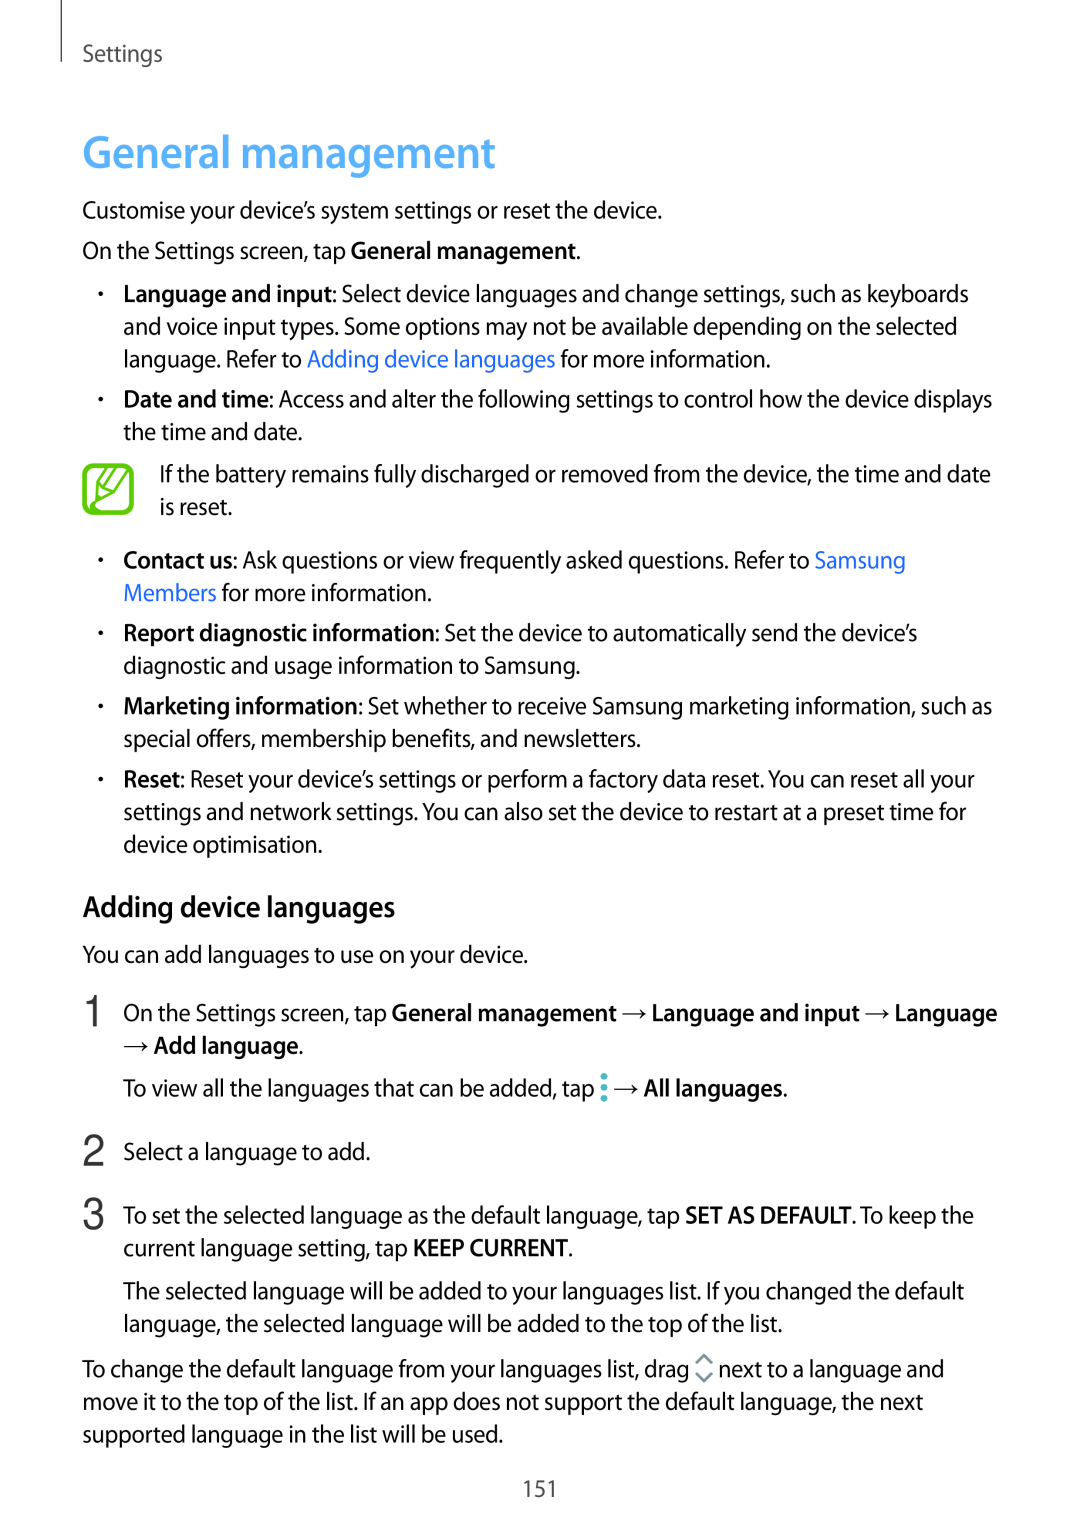 Samsung SM-A720FZIDKSA, SM-A520FZIADBT manual General management, Adding device languages, → Add language, Settings 